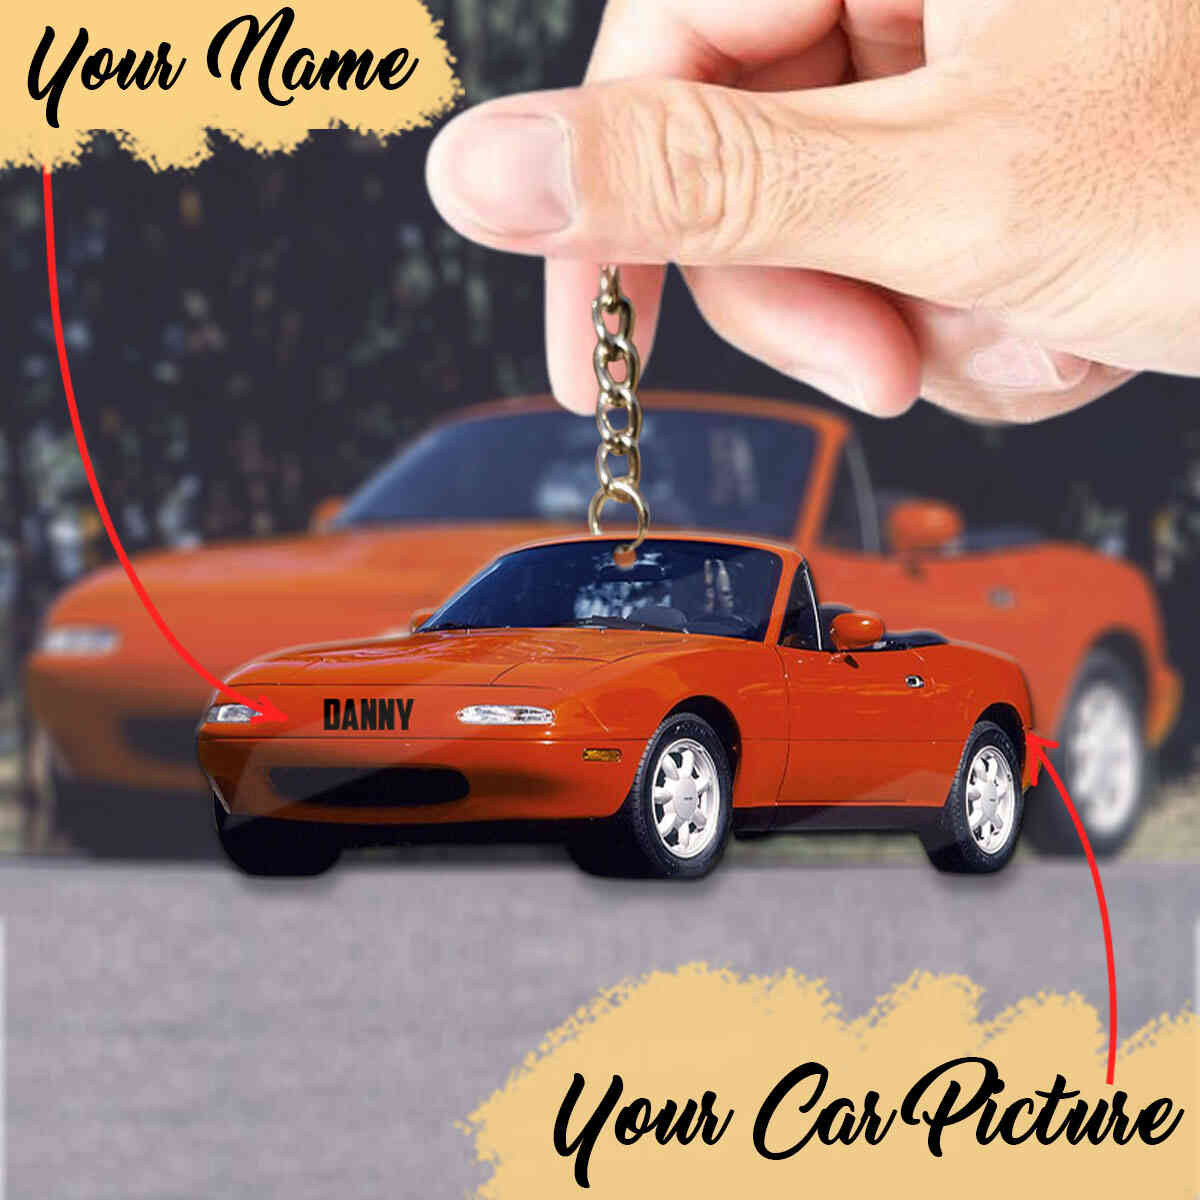 Personalized Mazda Key Chain Gift